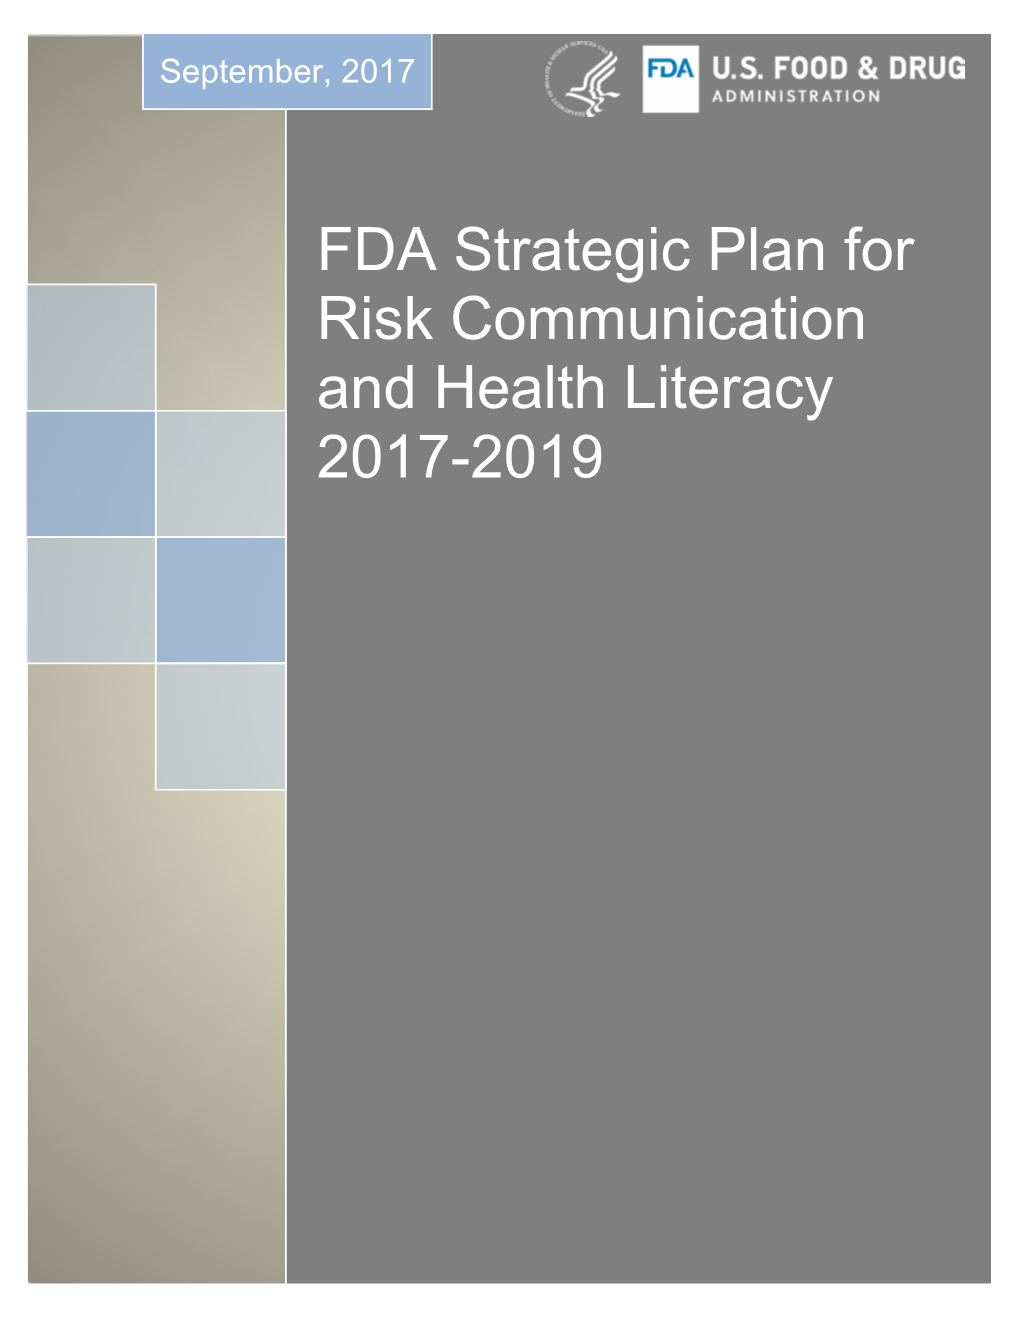 FDA Strategic Plan for Risk Communication and Health Literacy 2017-2019